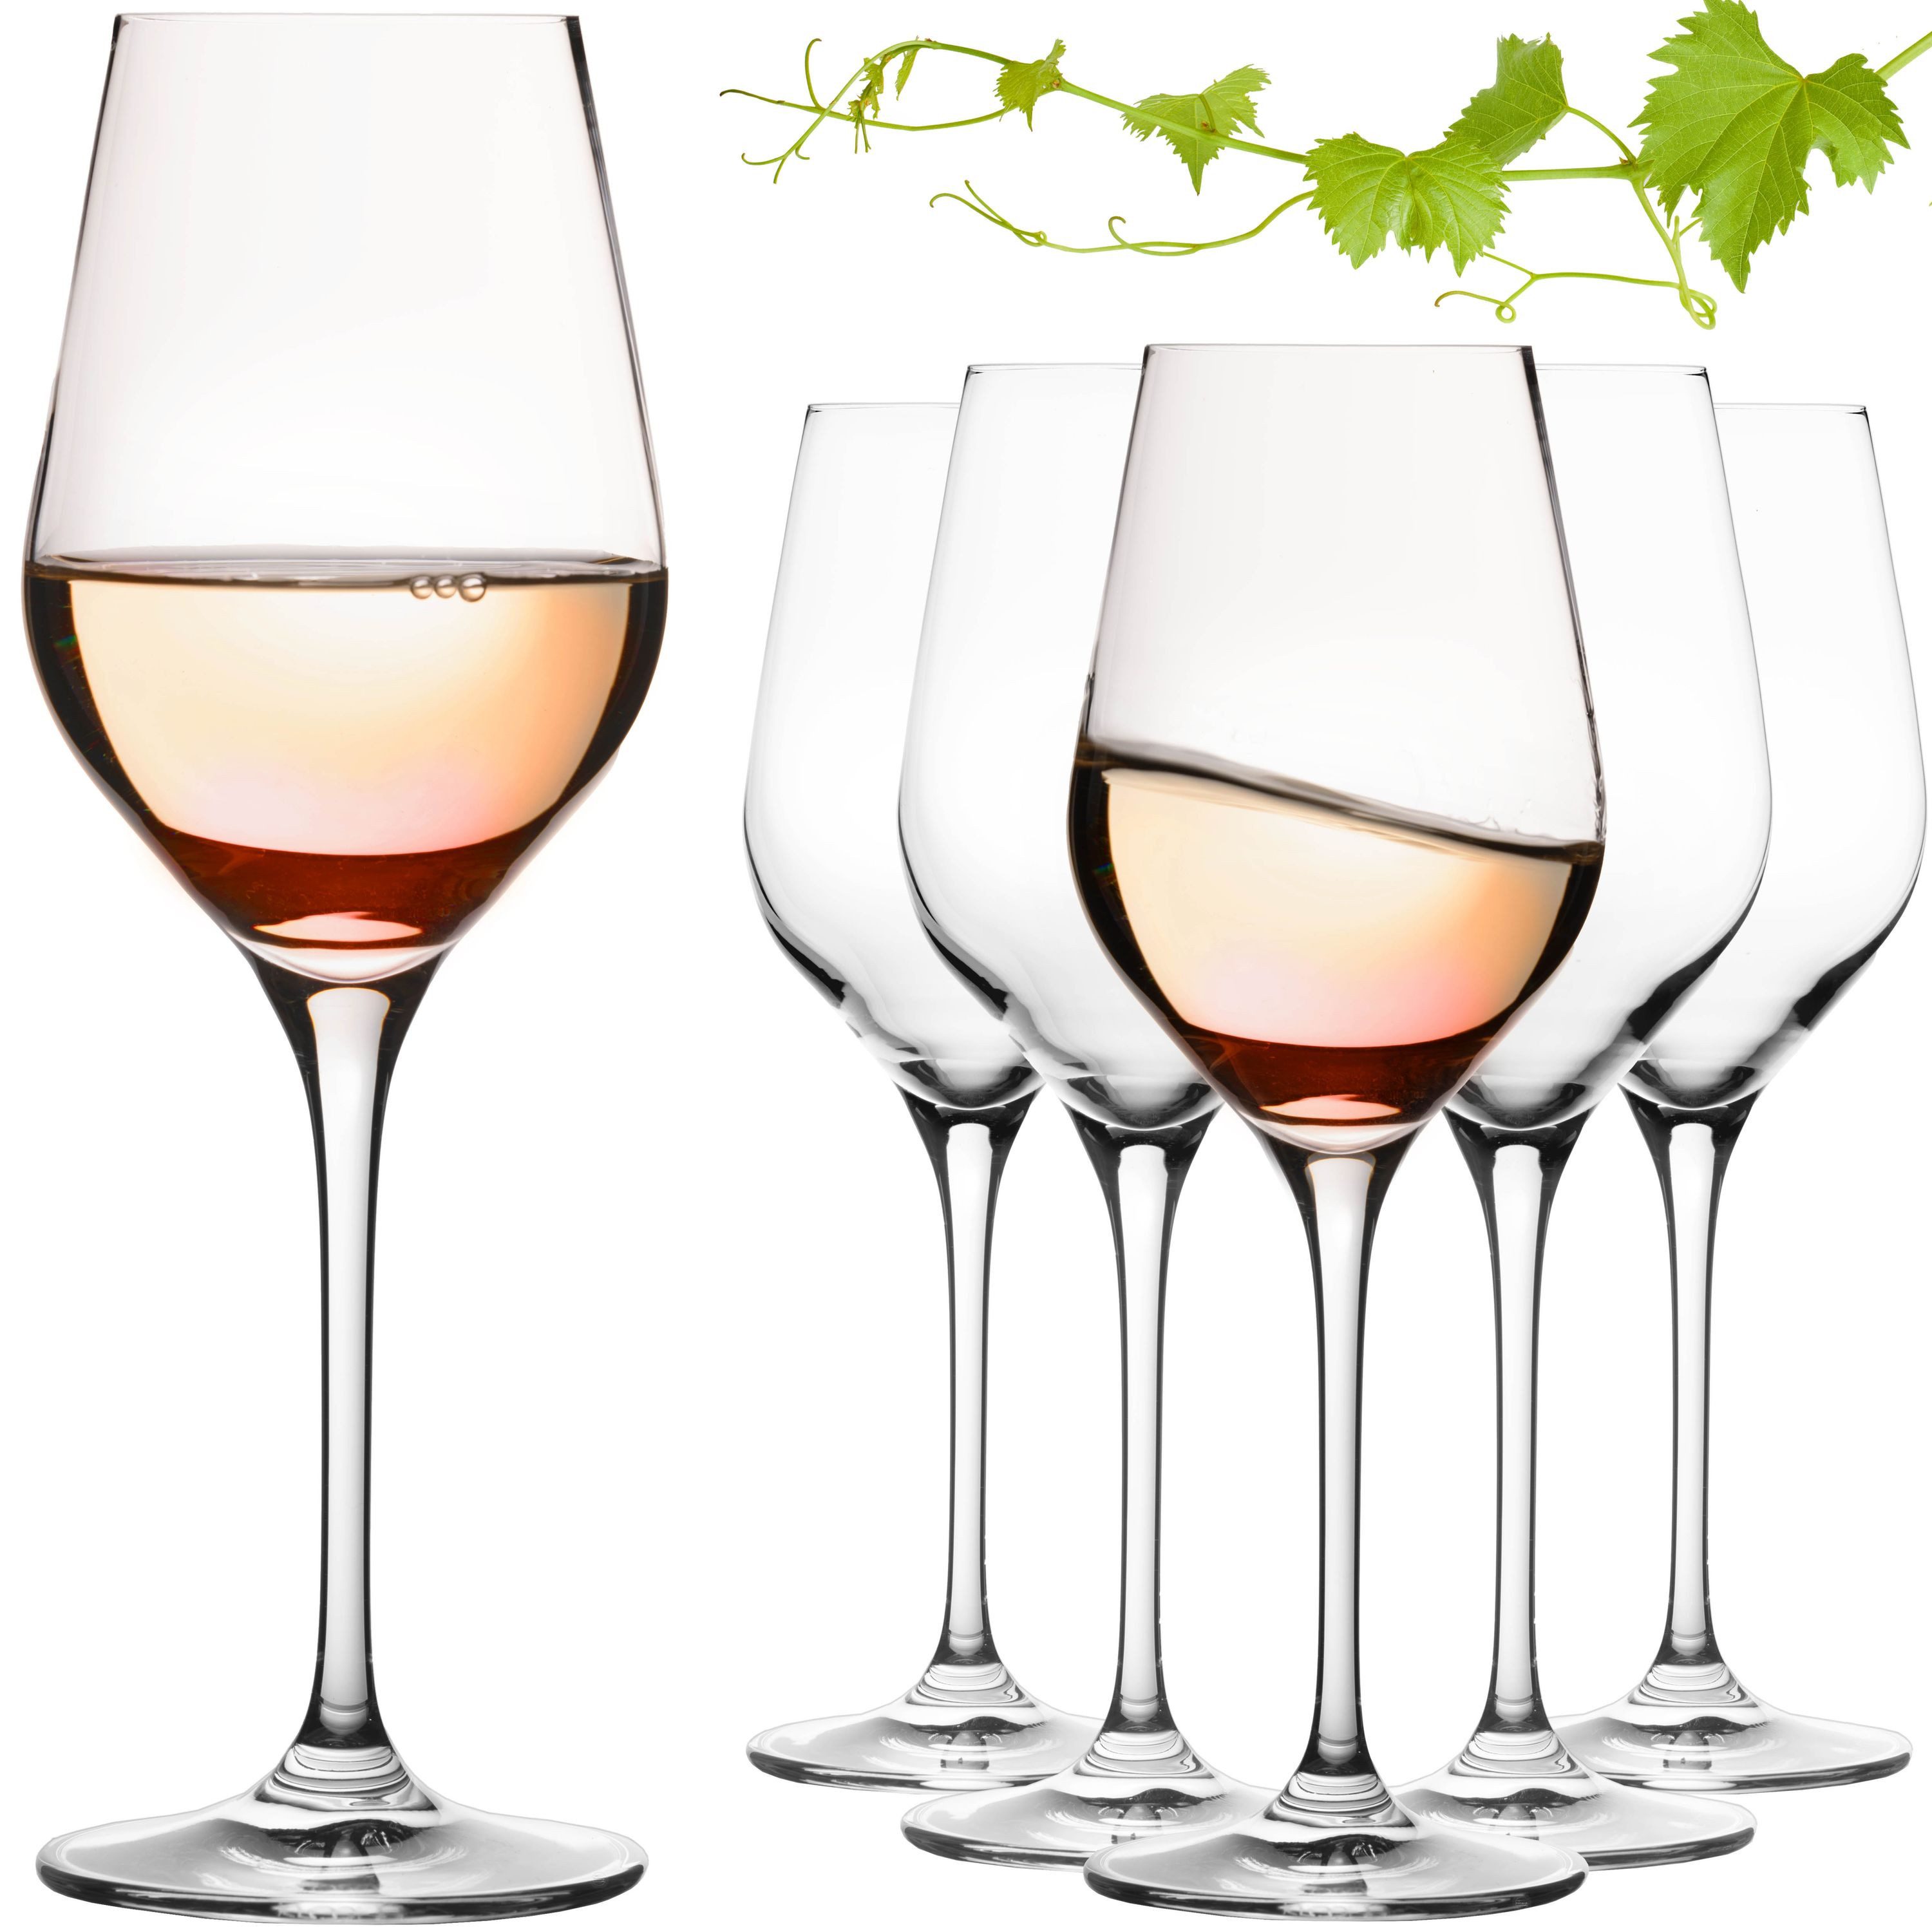 IMPERIAL glass Weinglas Weißweingläser 200ml "Sydney" Set 6-Teilig, Crystalline Glas, Riesling Glas aus Crystalline Glas Weingläser Spülmaschinenfest